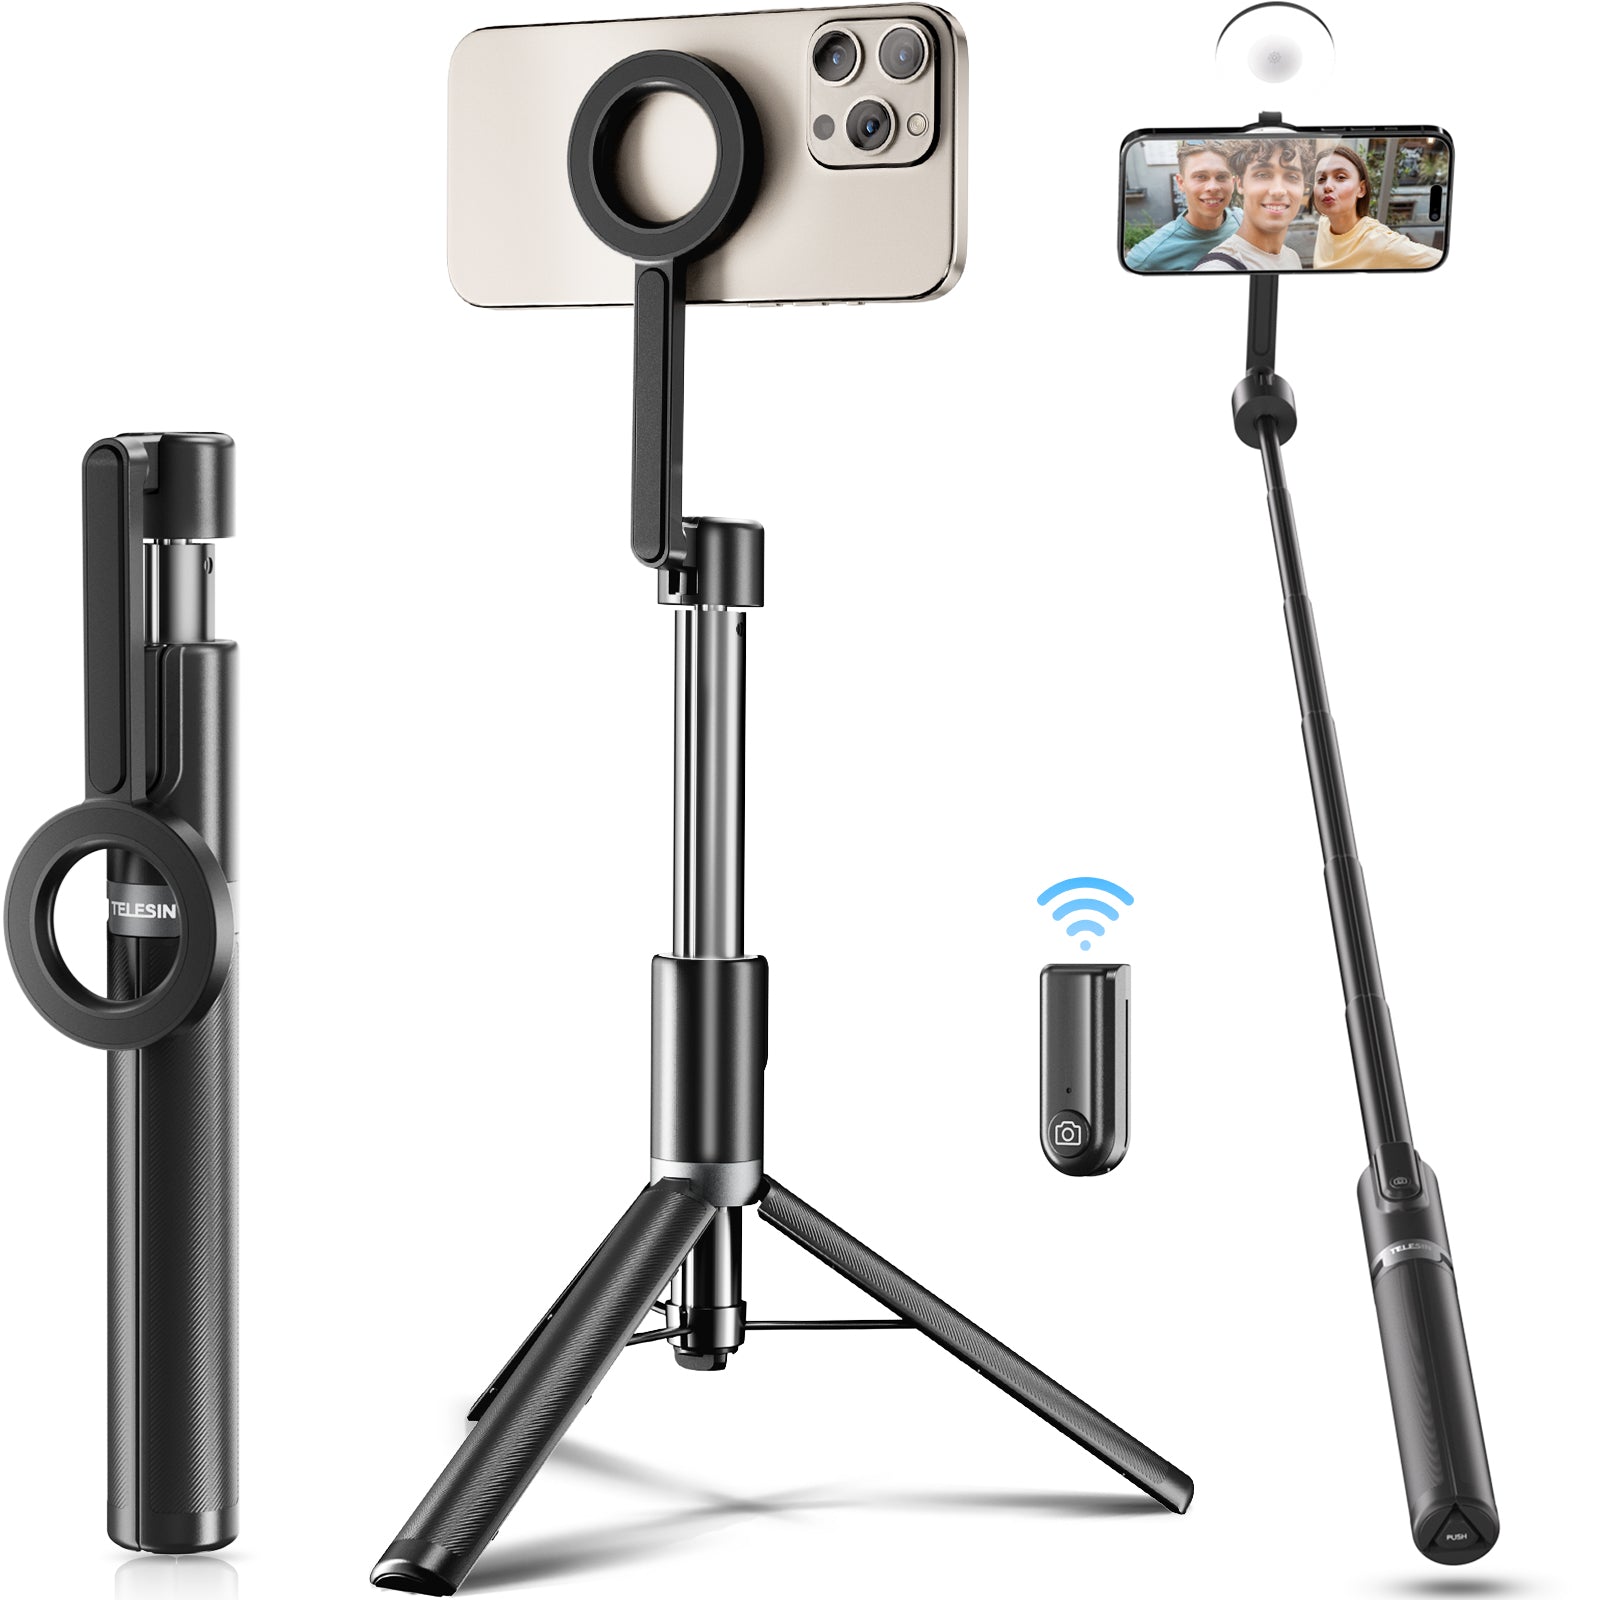 TELESIN 1.3m Magnetic Remote Control Selfie Stick for Phones